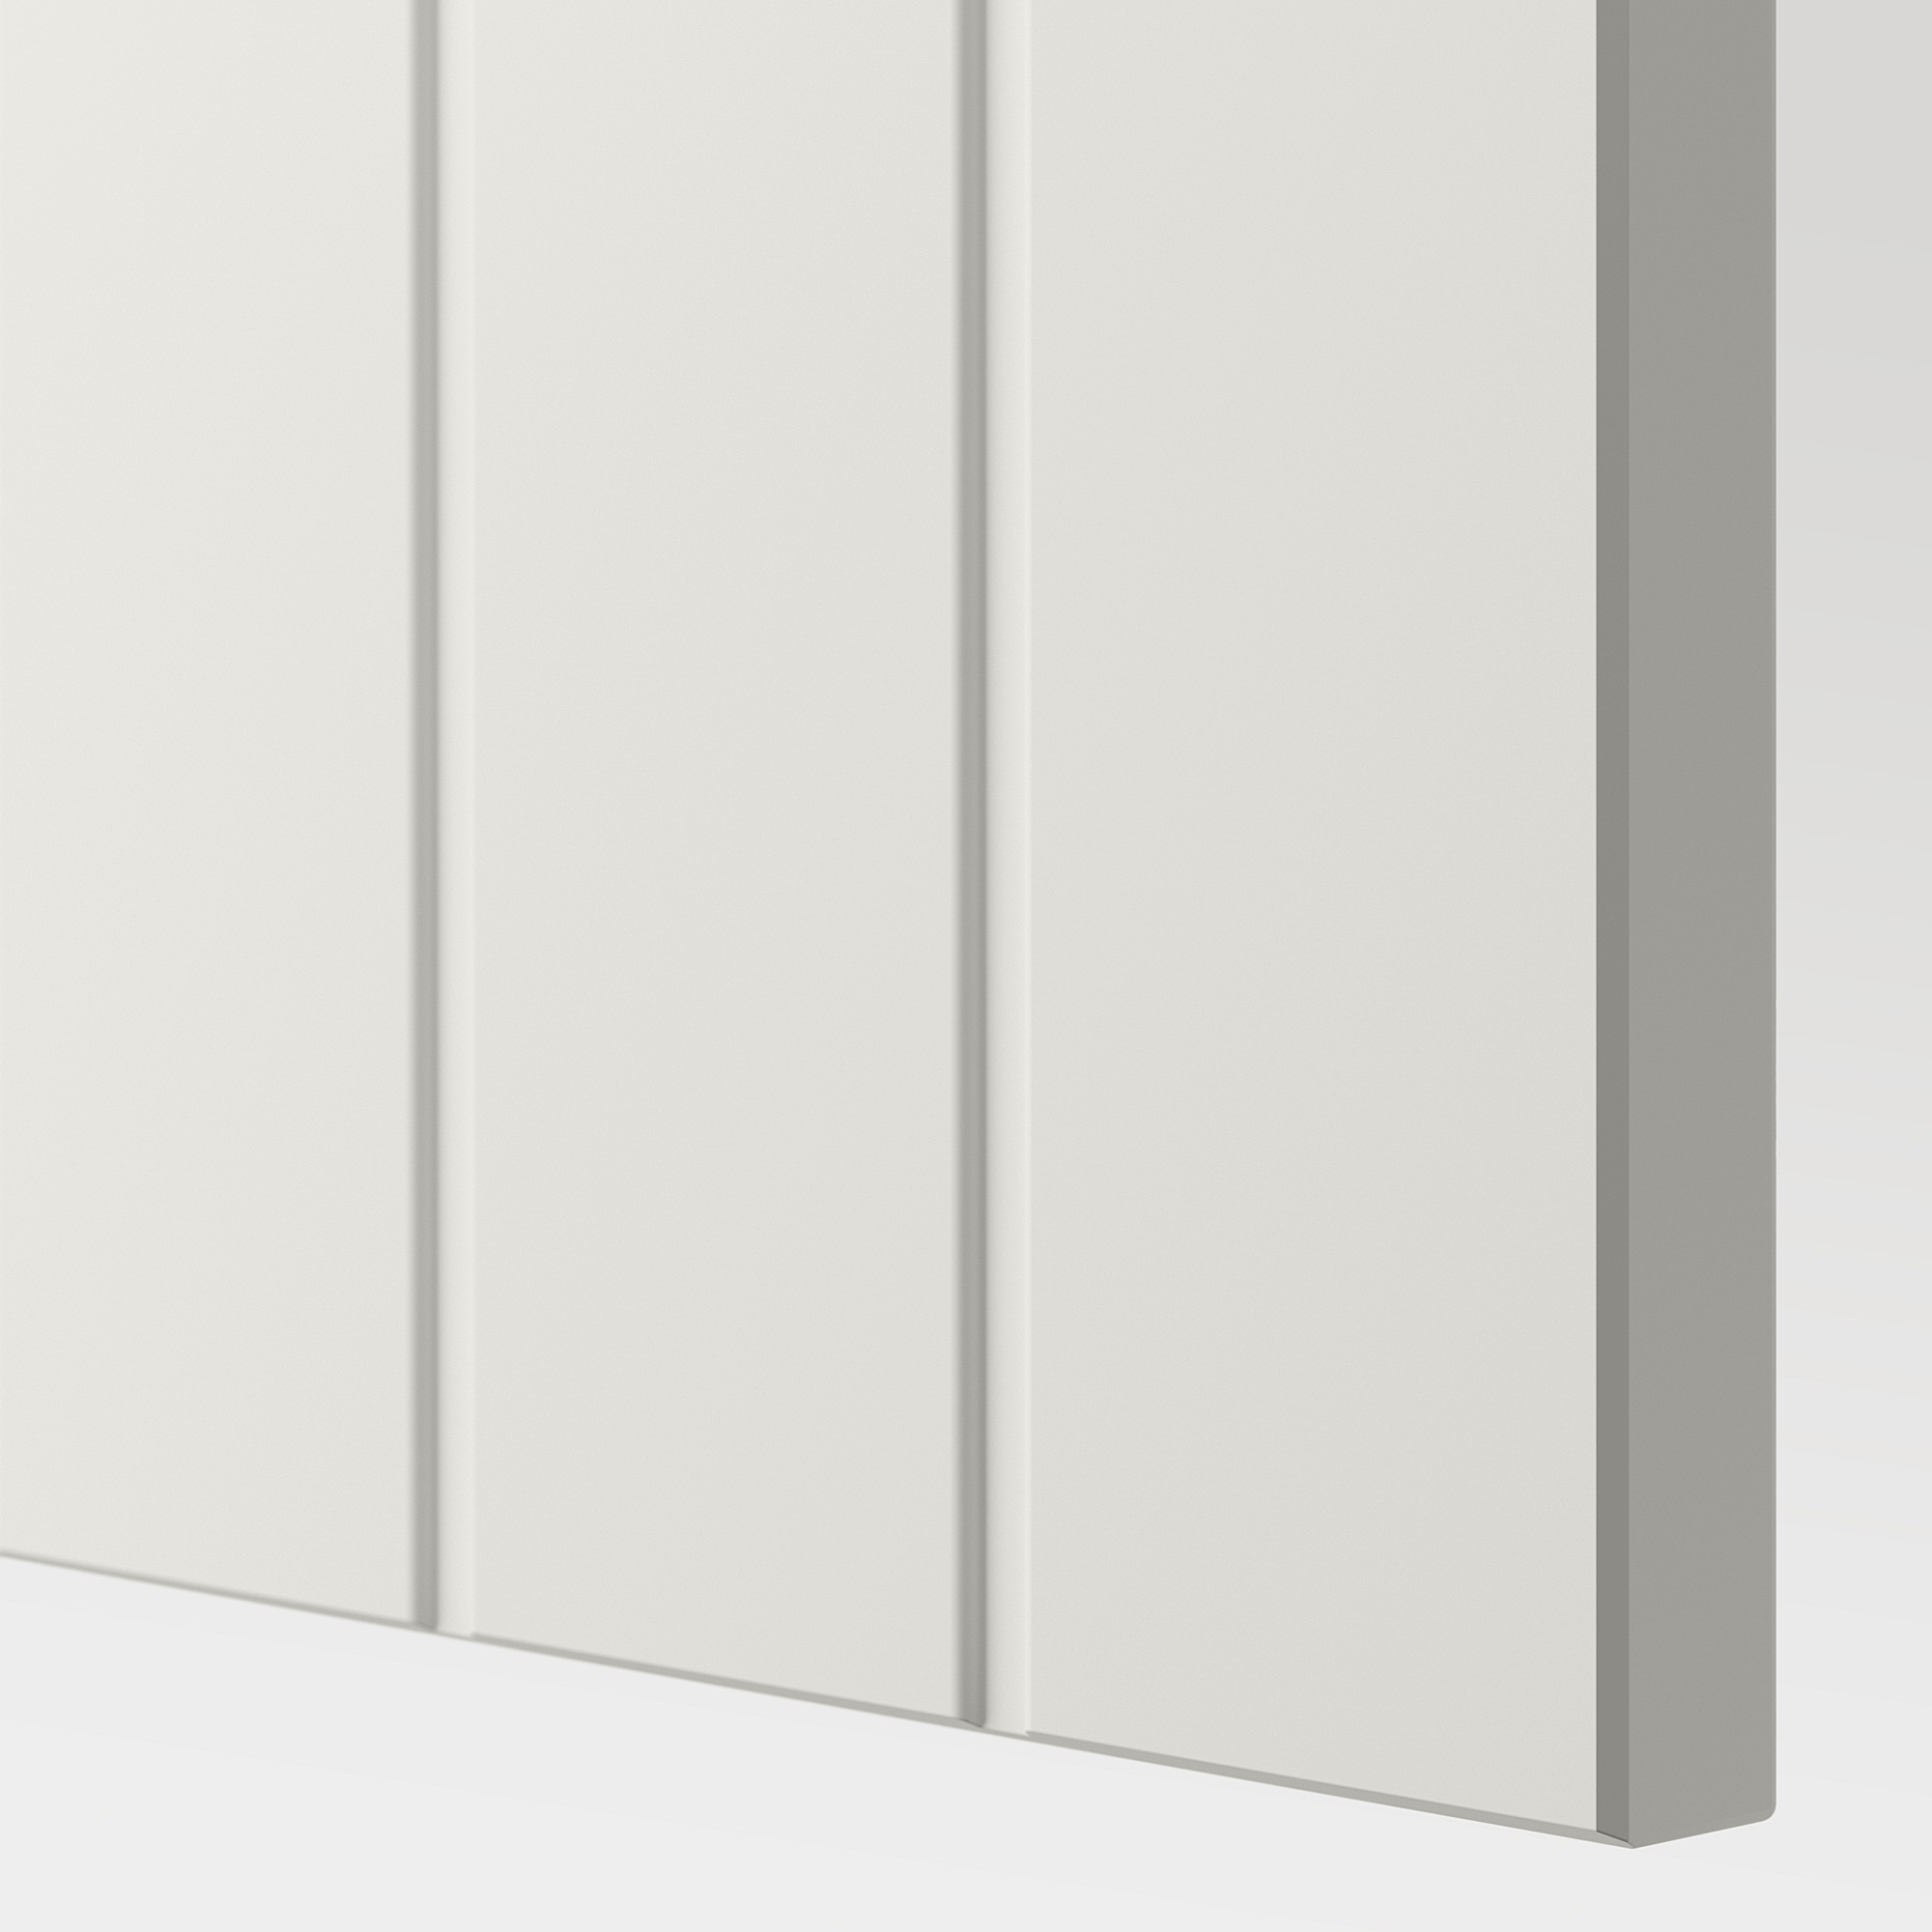 BESTÅ shelf unit with doors